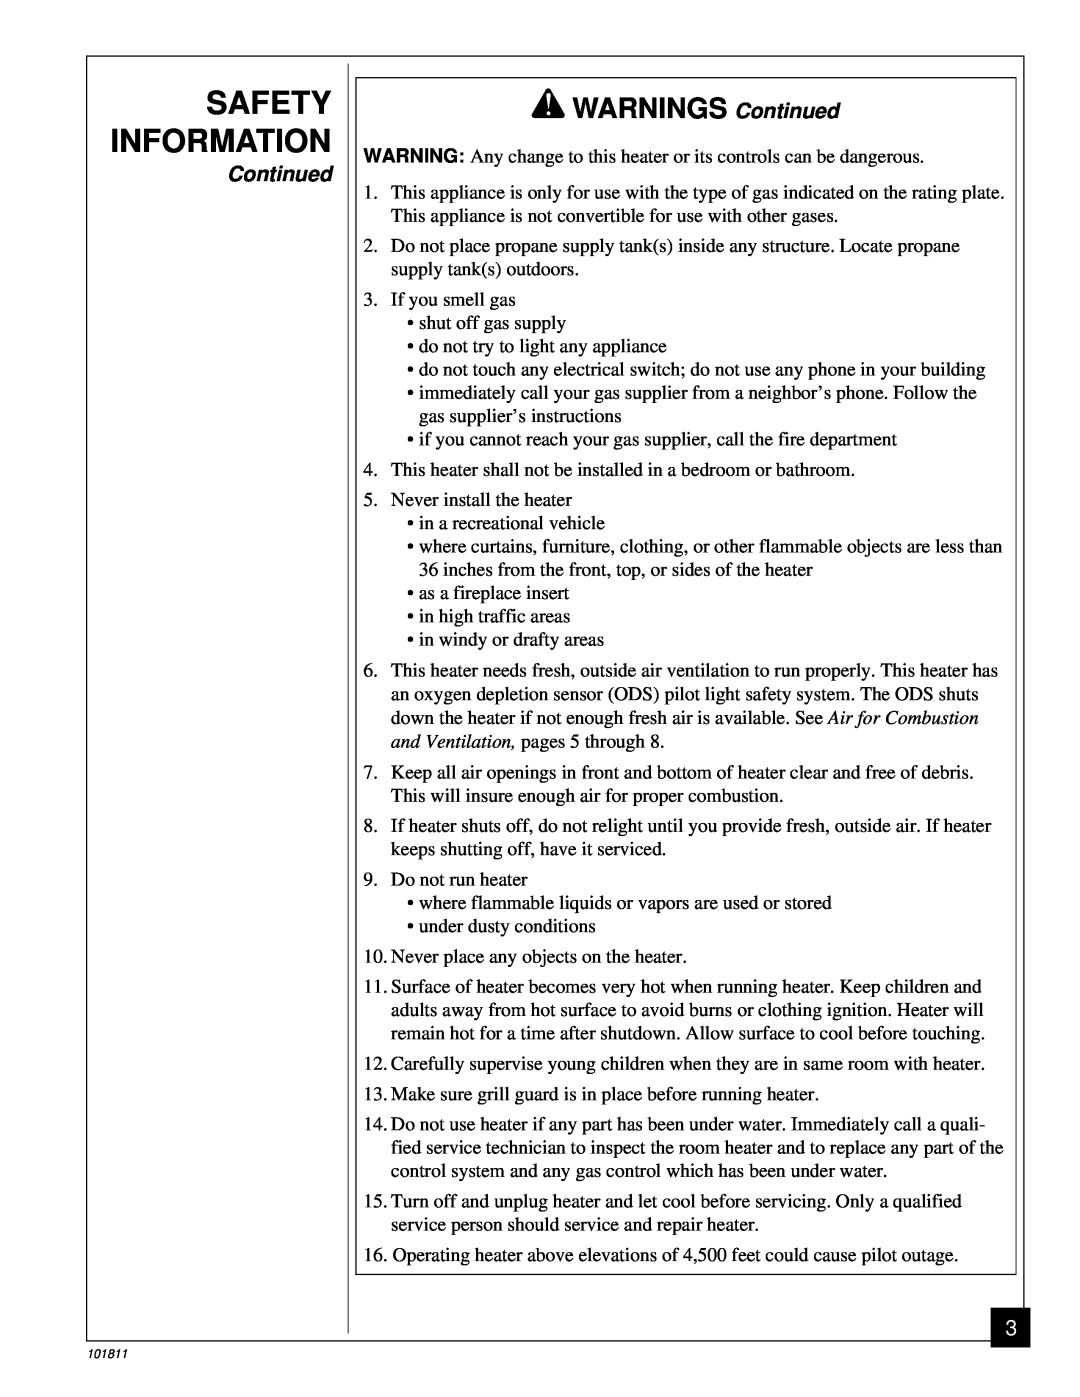 Desa 101811-01C.pdf installation manual Safety Information, WARNINGS Continued 